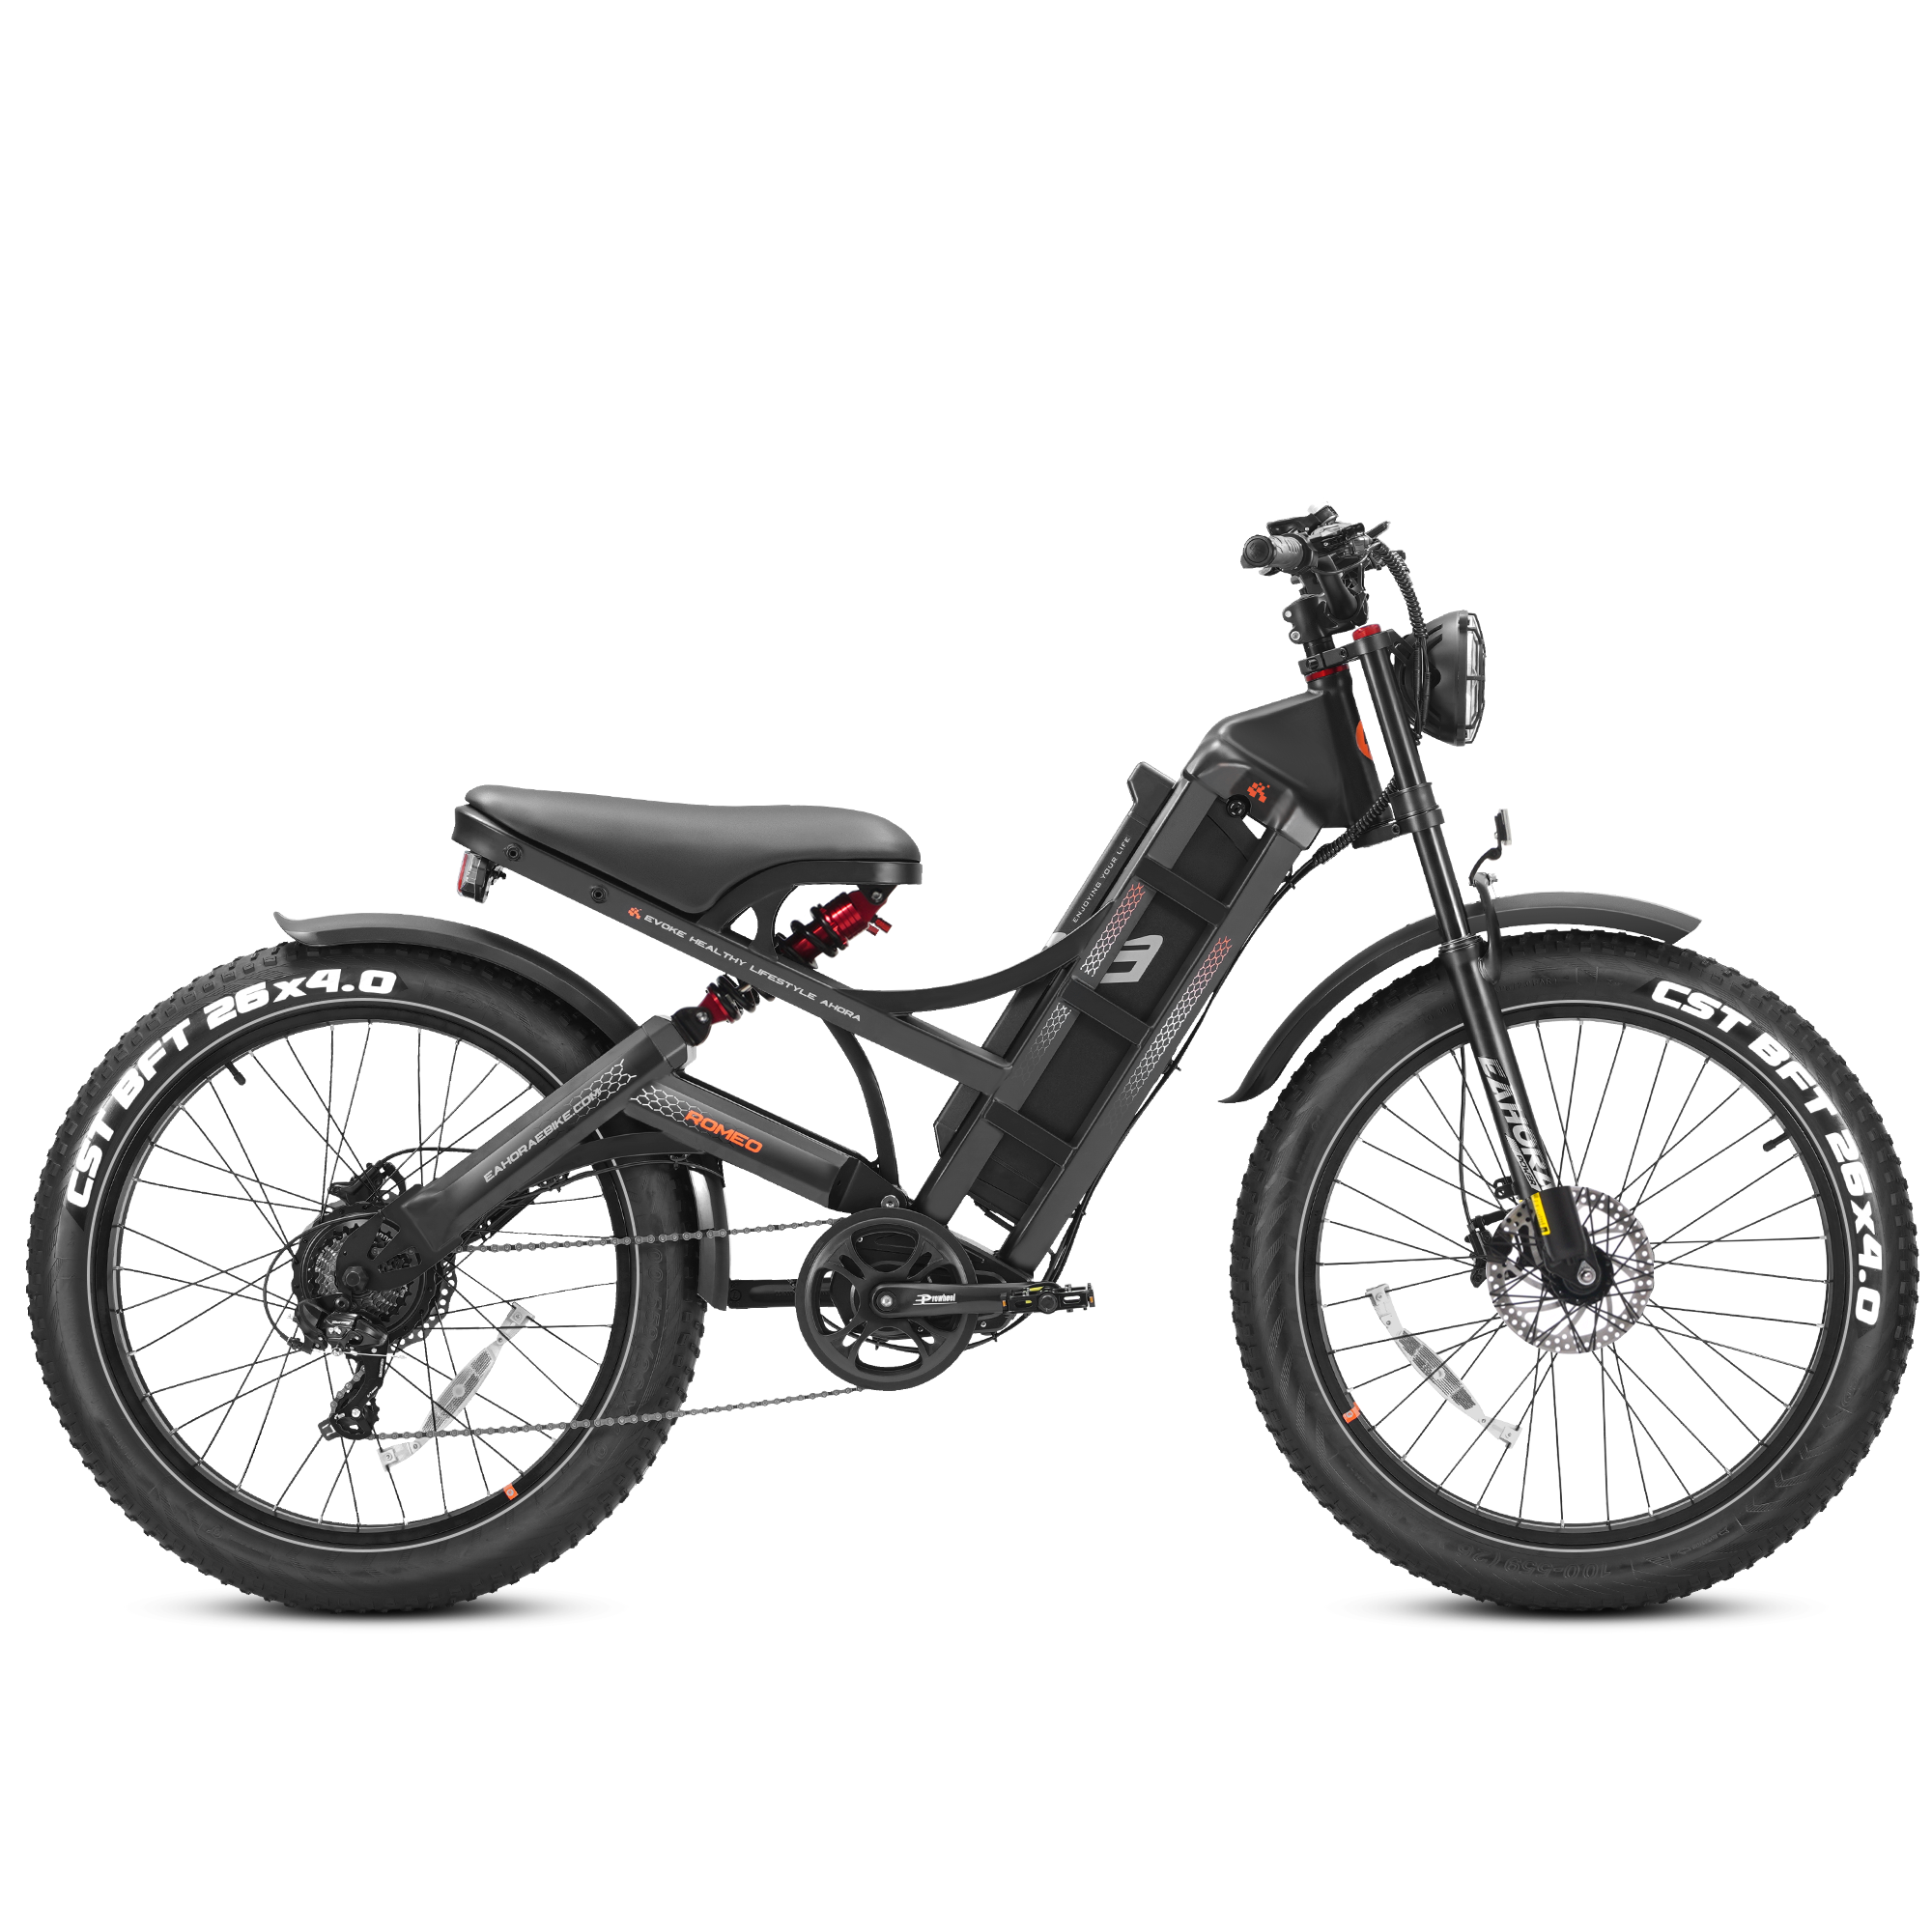 First moped style e-bike for EU : r/ebikes